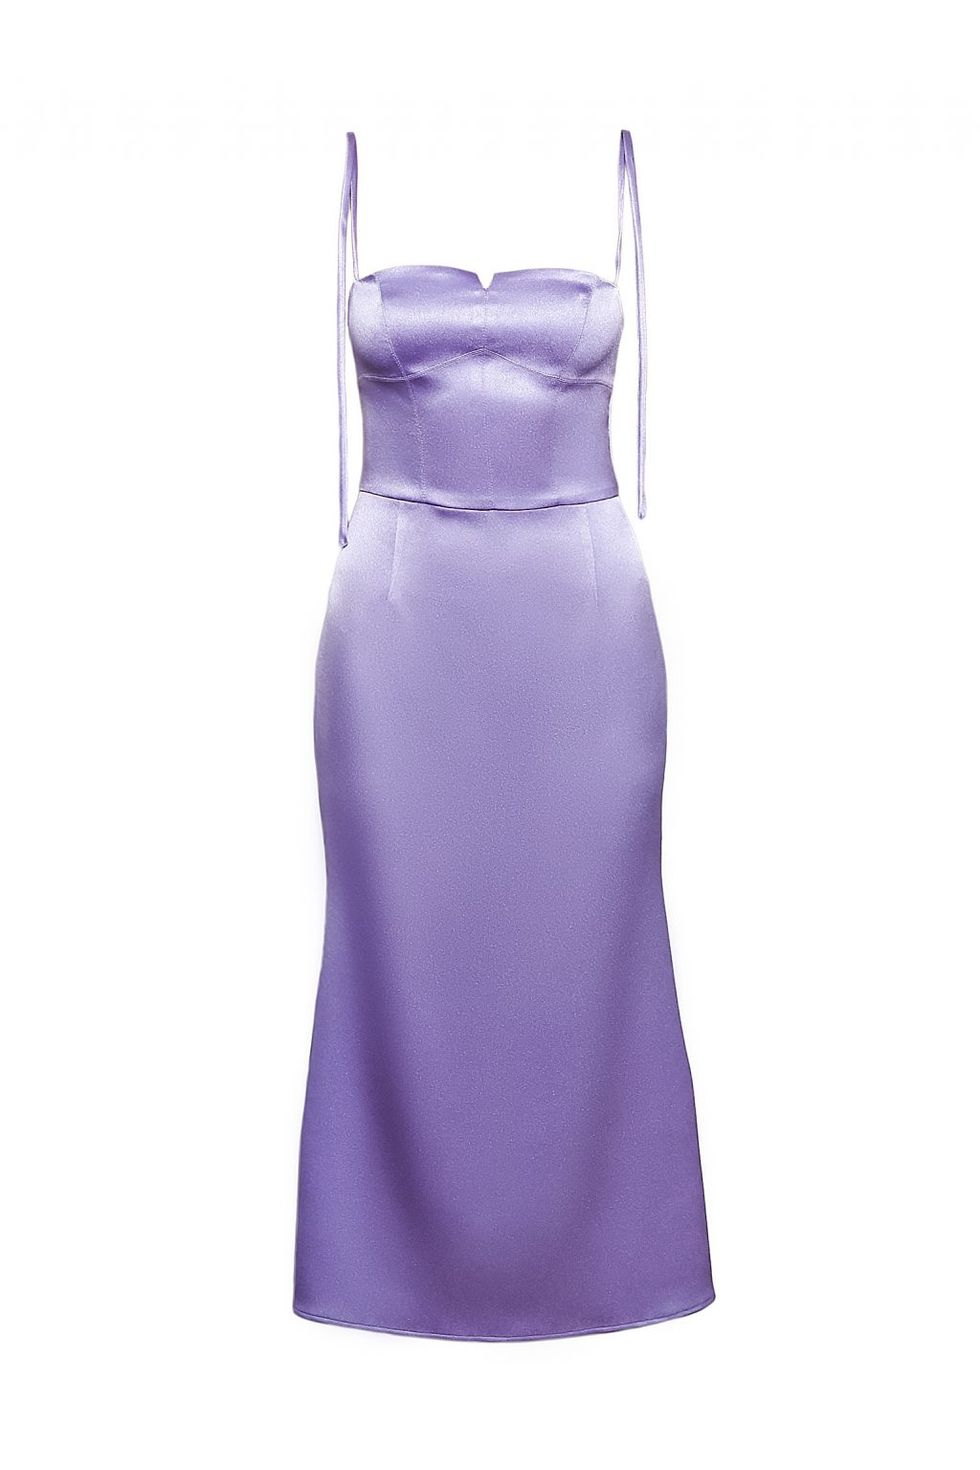 Dress, Purple, Violet, Clothing, Lilac, Lavender, Satin, Cocktail dress, Day dress, Neck, 